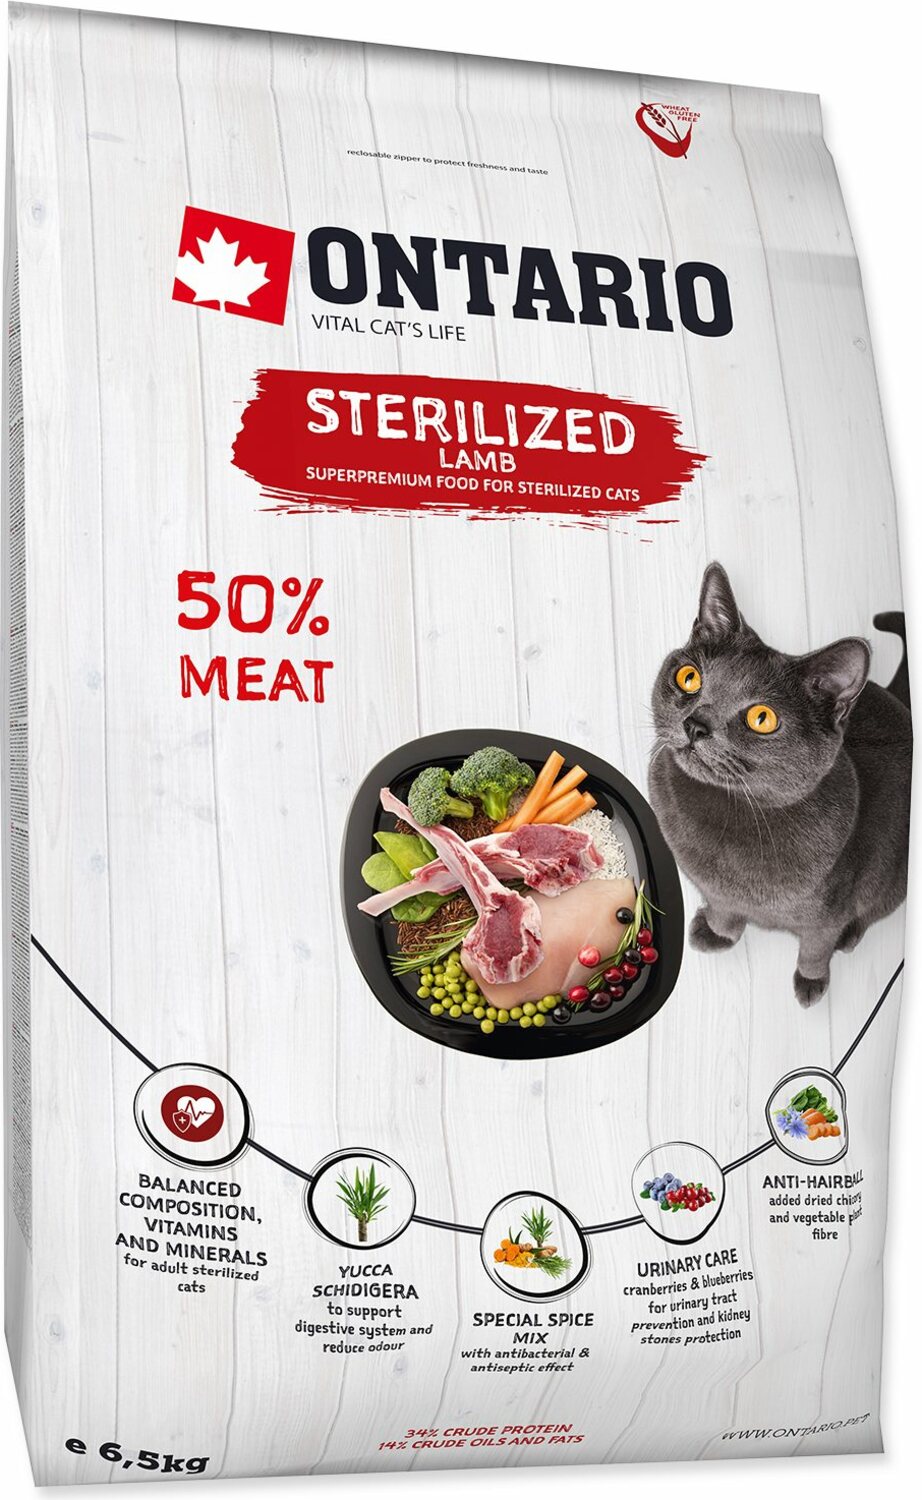 Krmivo Ontario Cat Sterilised Lamb 6,5kg